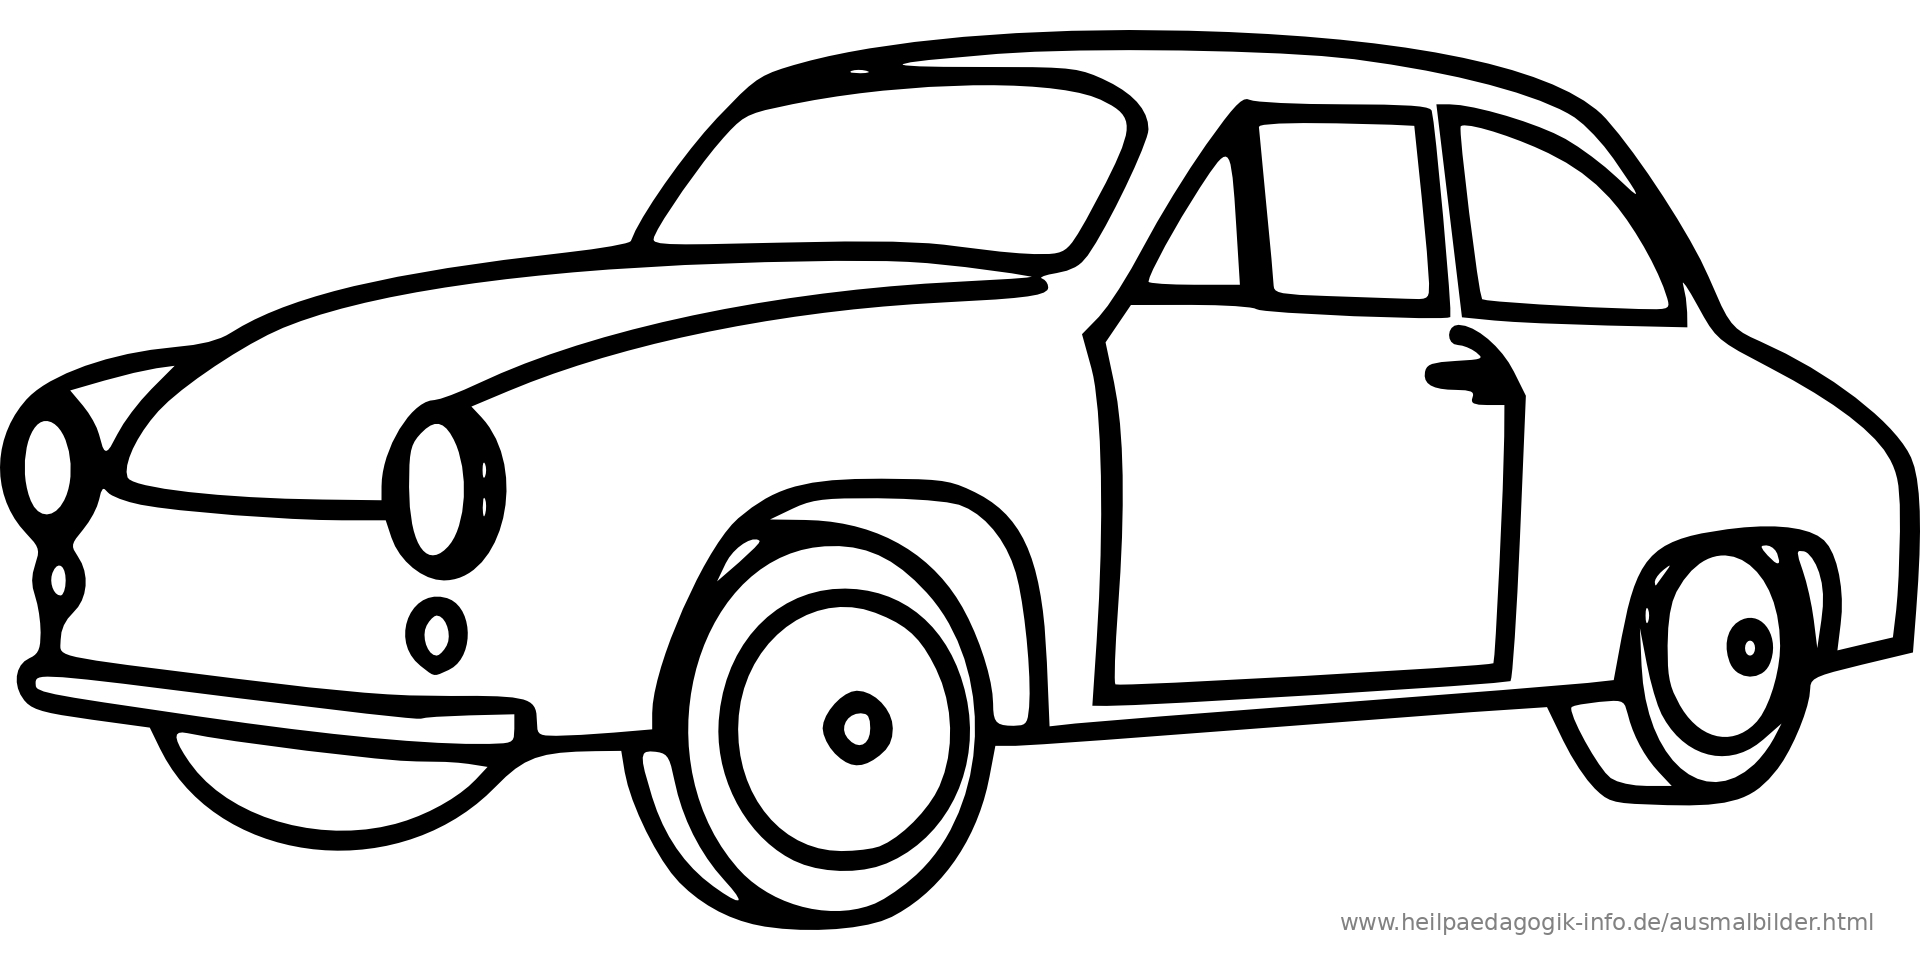 ausmalbilder autos kostenlos  ausmalbilder coloring pages